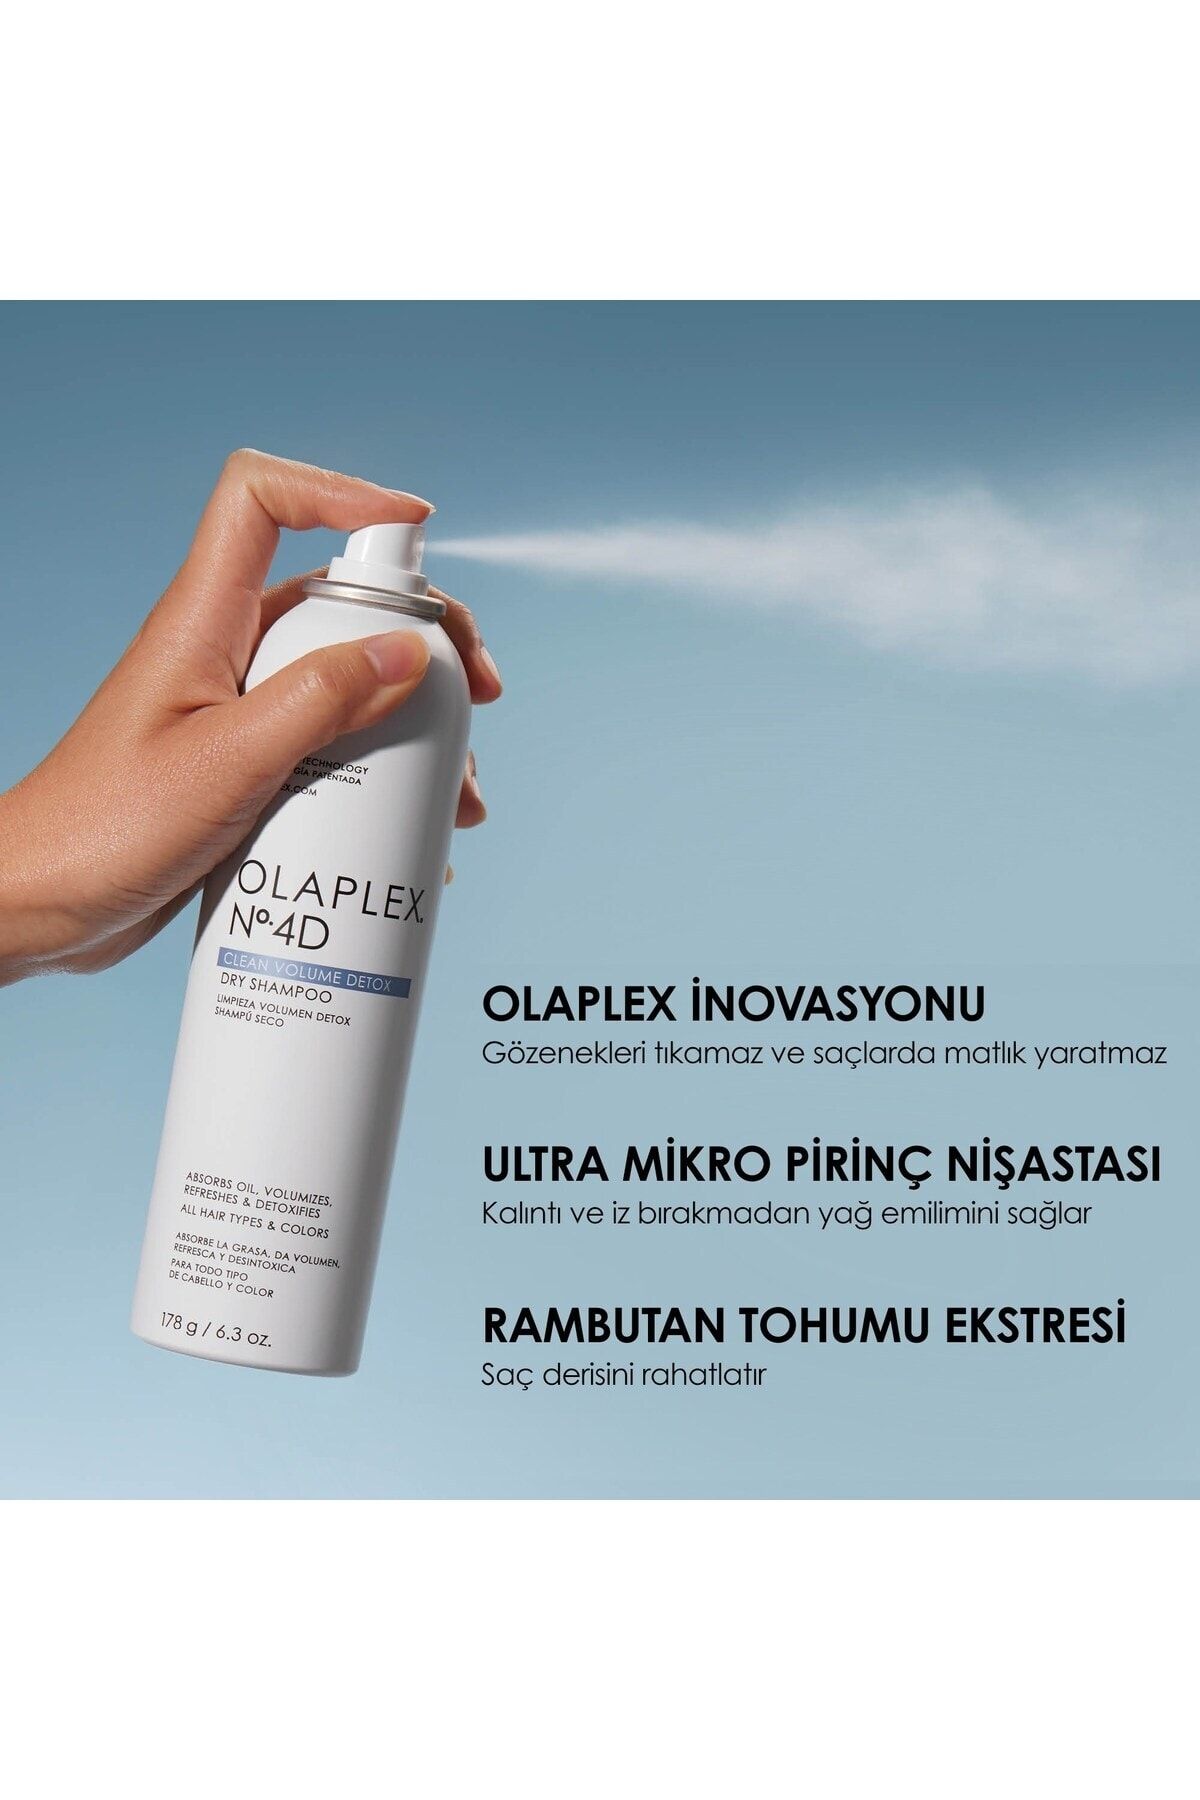 Olaplex شامپو خشک تصفیه‌کننده حجم دهنده مو OLAPLEX N ° .4D 178g